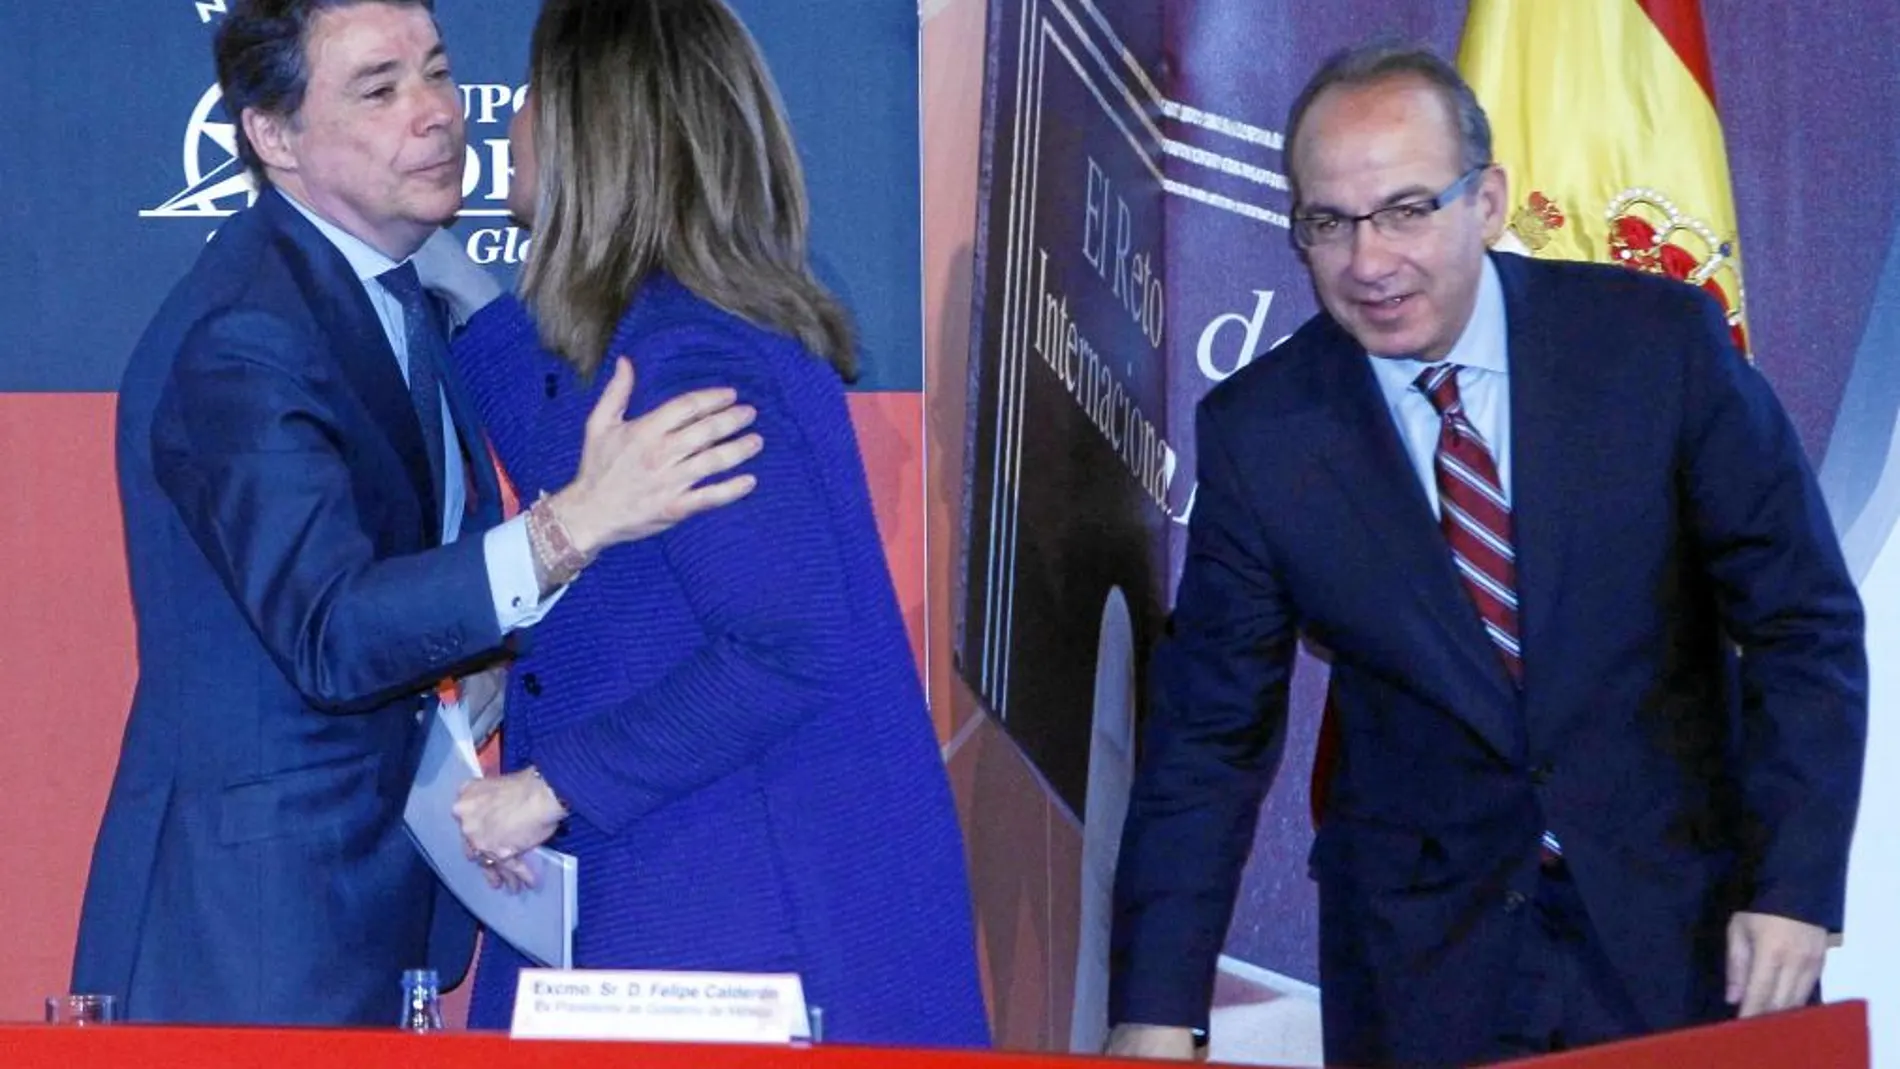 González saluda a Báñez en presencia del ex presidente mexicano, Felipe Calderón